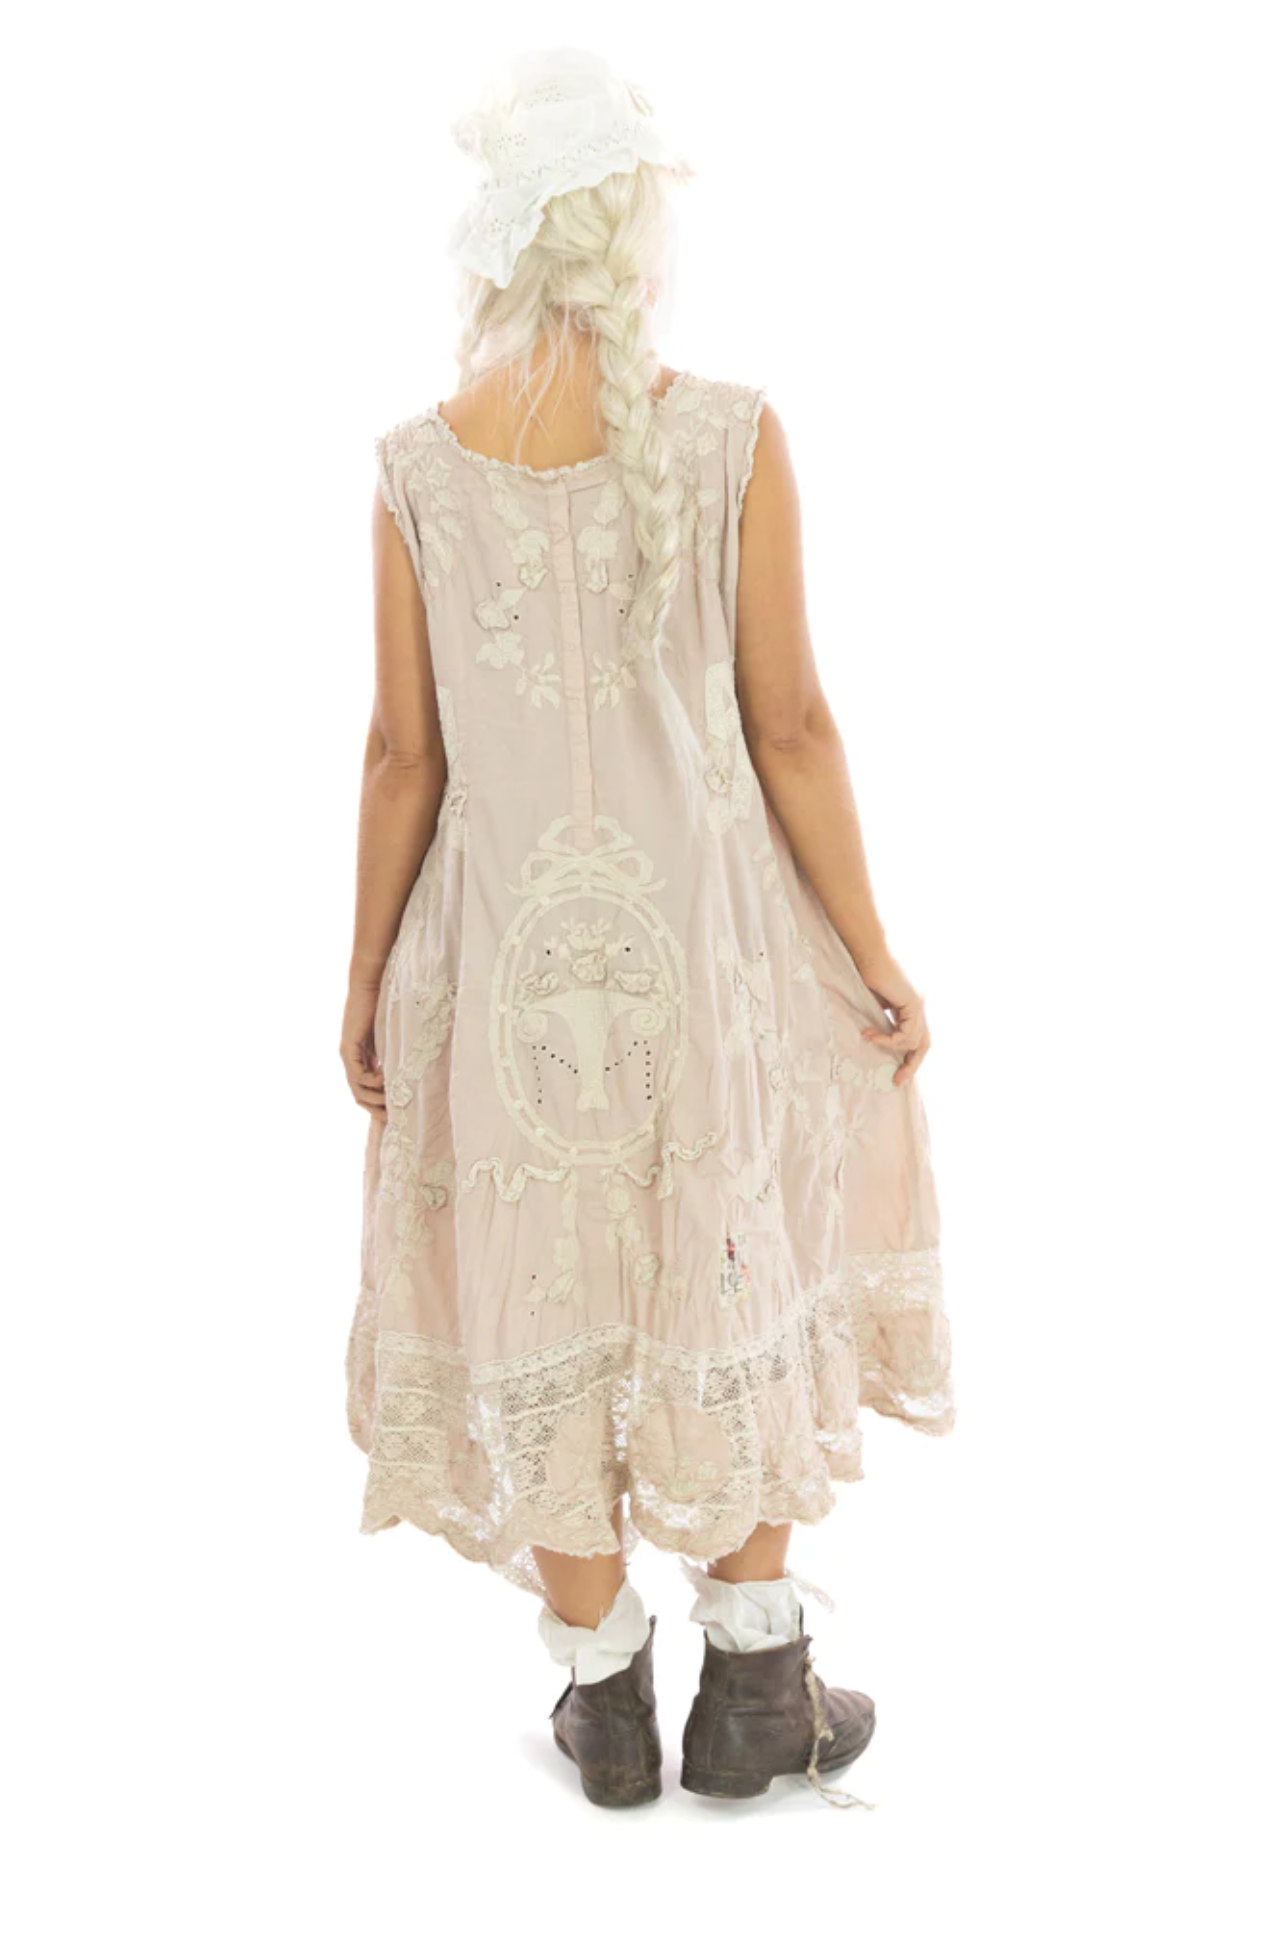 Magnolia Pearl DRESS 846-DANDY-OS  Tibi Lace Bow Dress